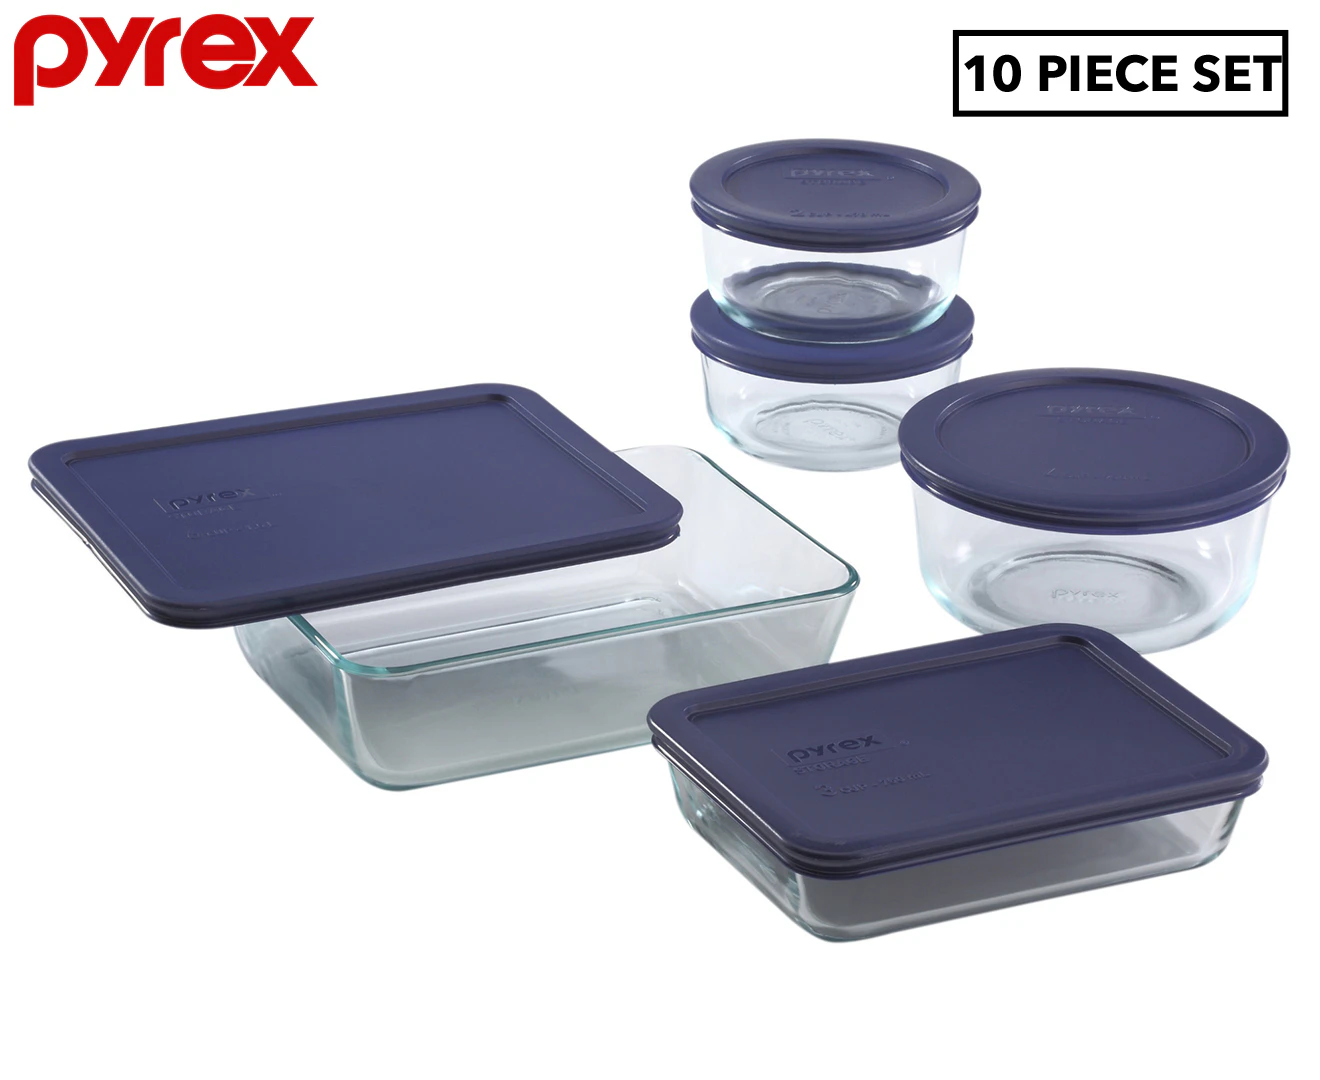 Pyrex Ultimate Storage 10-Piece Set